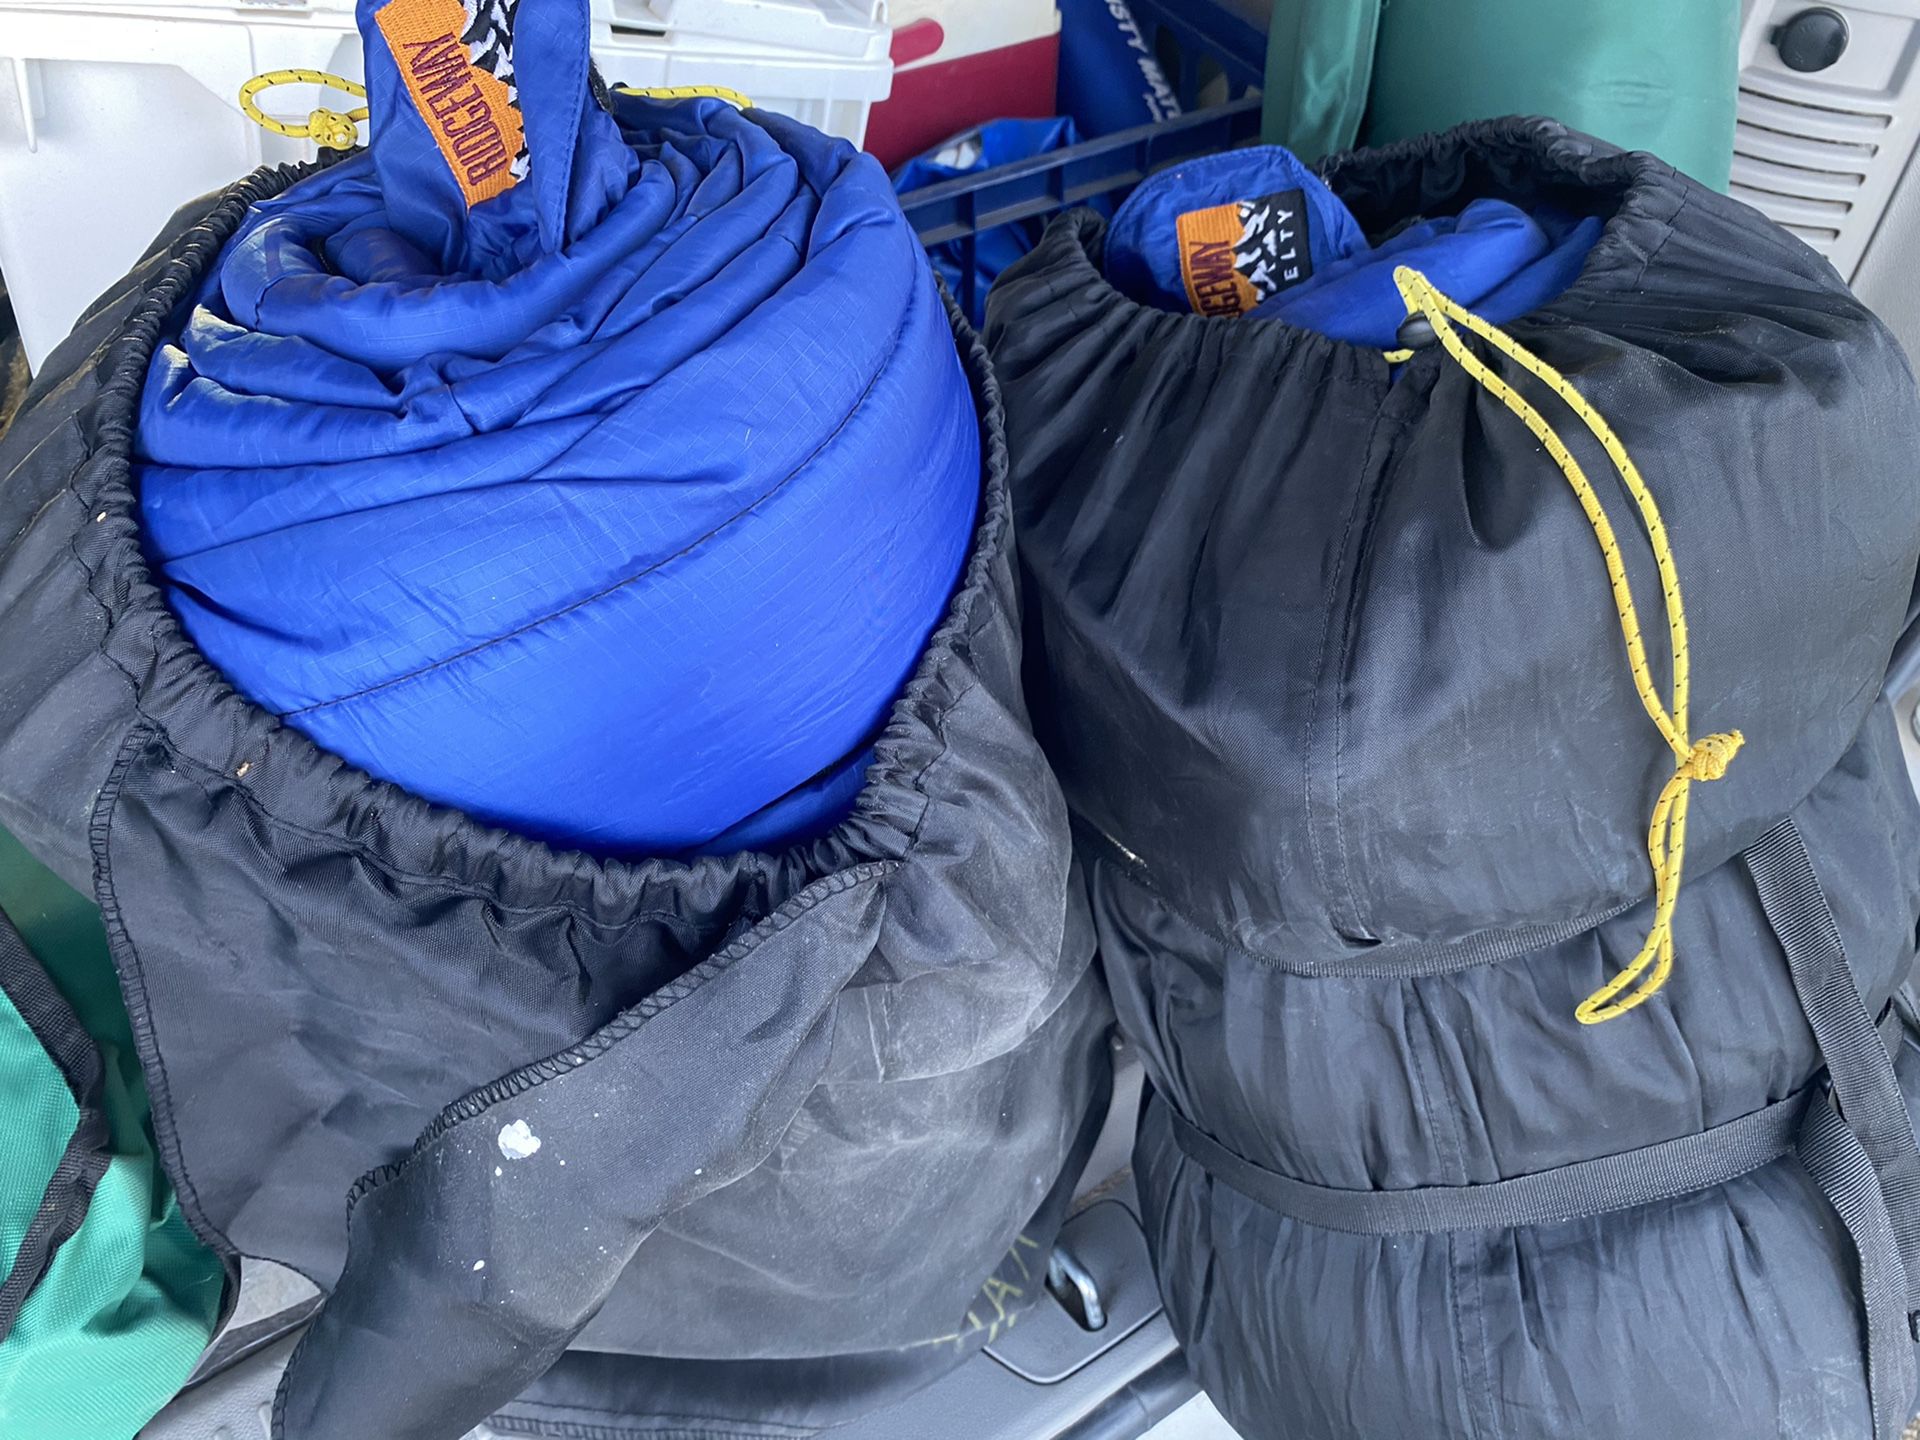 Two Kelty Ridgeway sleeping bags